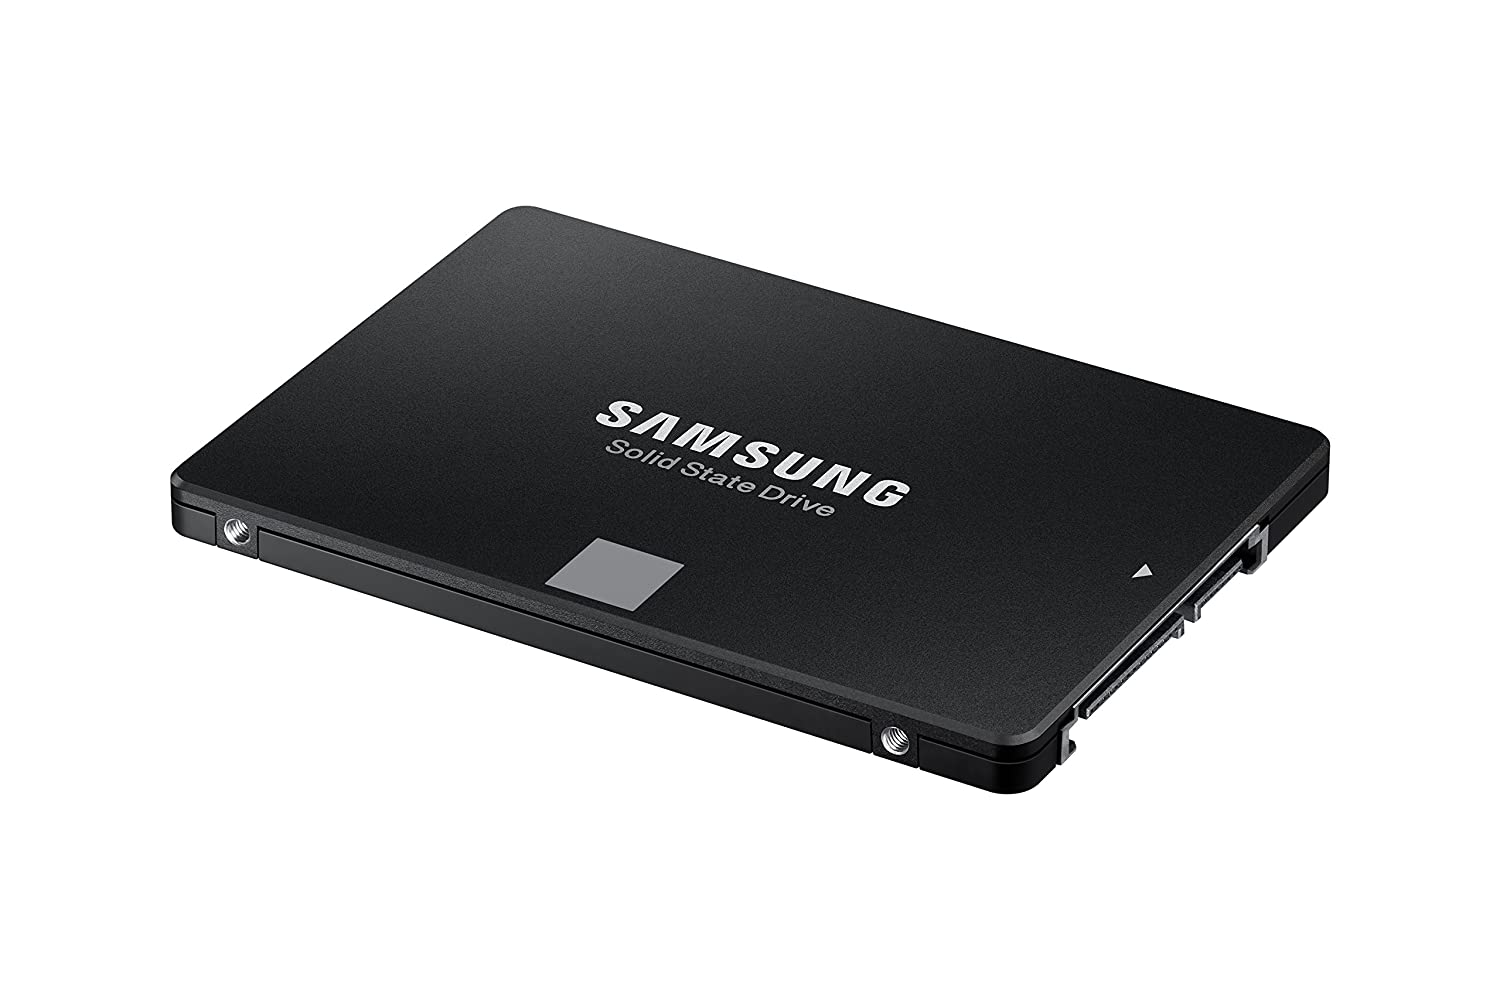 8. Samsung 860 EVO 500 GB SSD